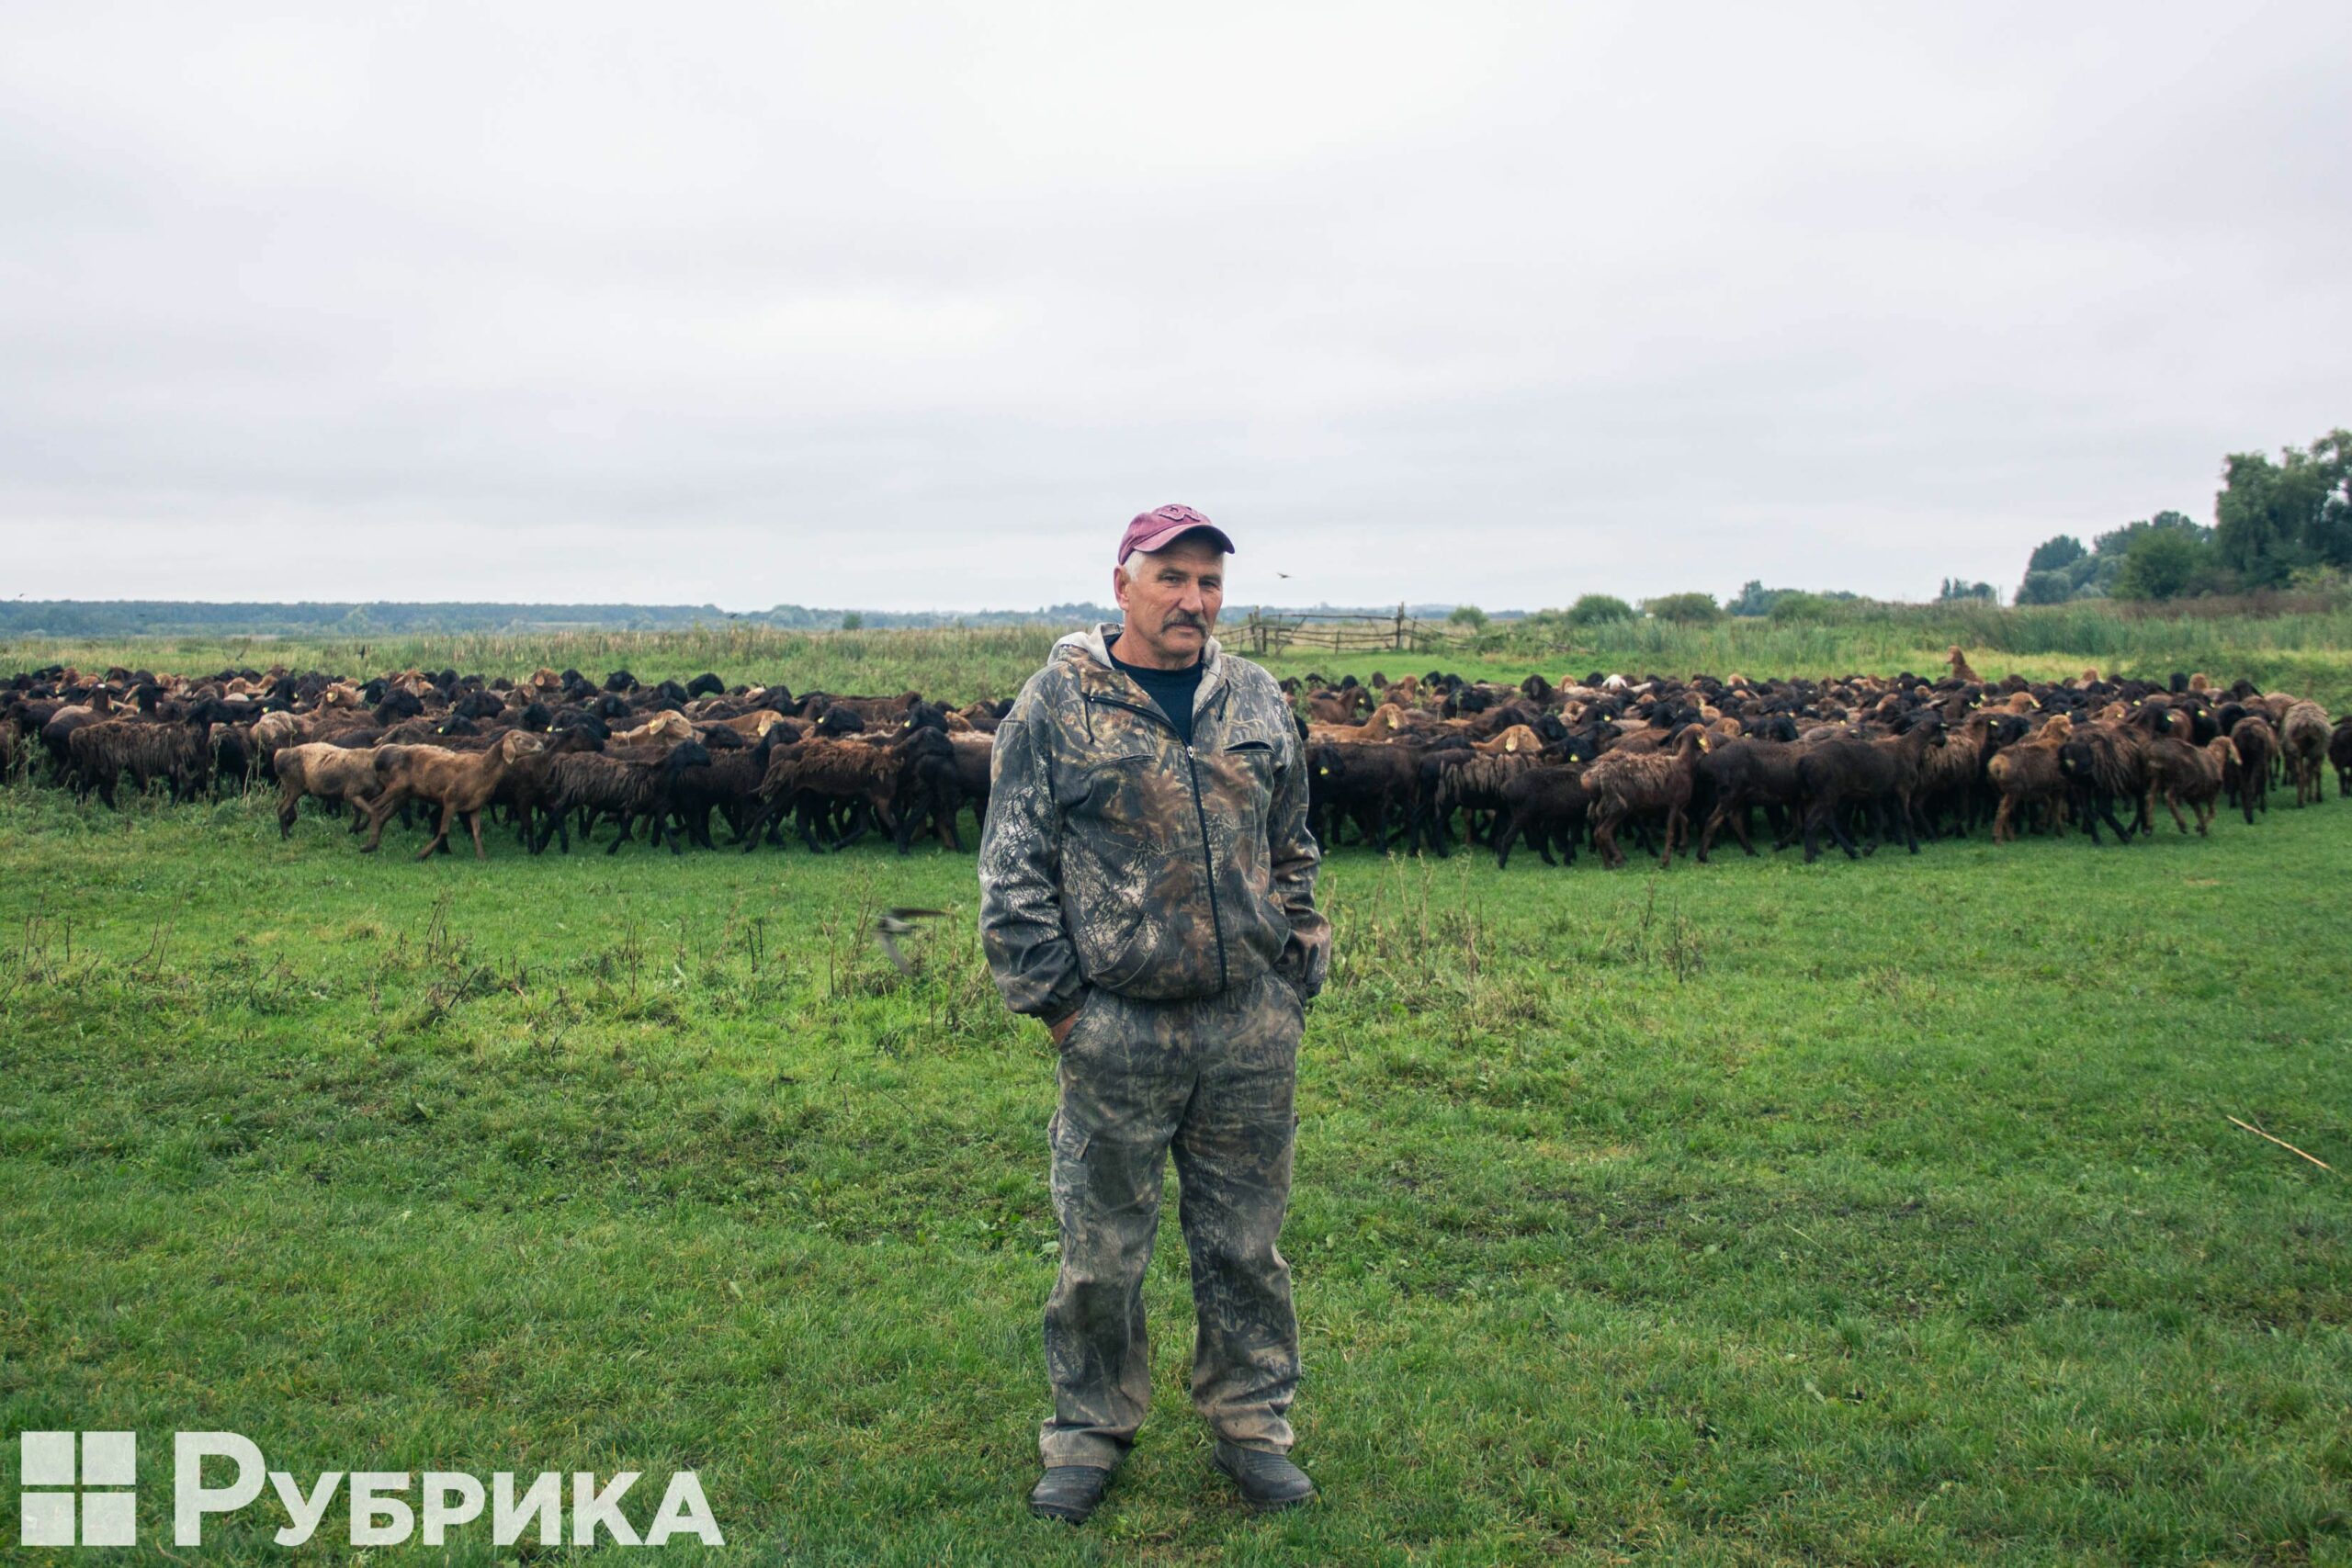 Володимир Альохін — український фермер з Донеччини